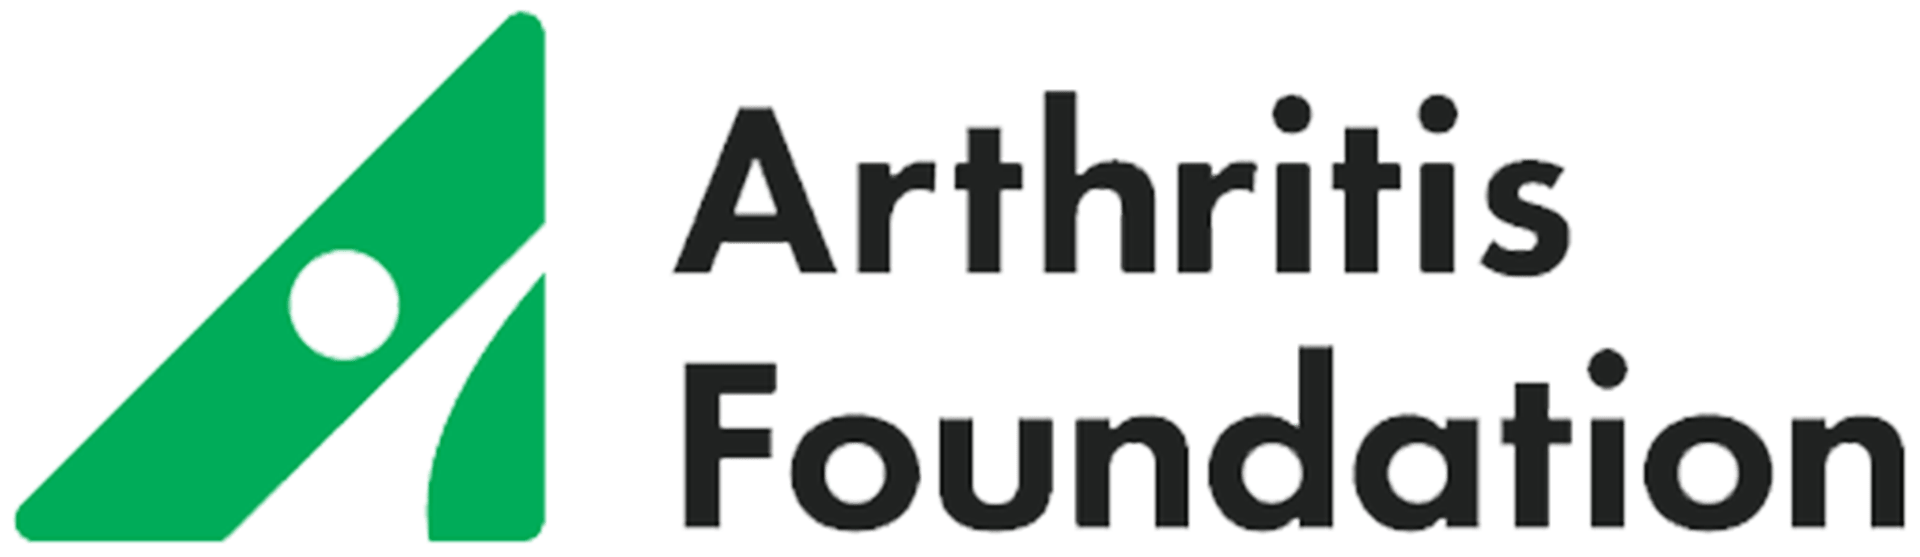 arthritis-foundation-logo-1